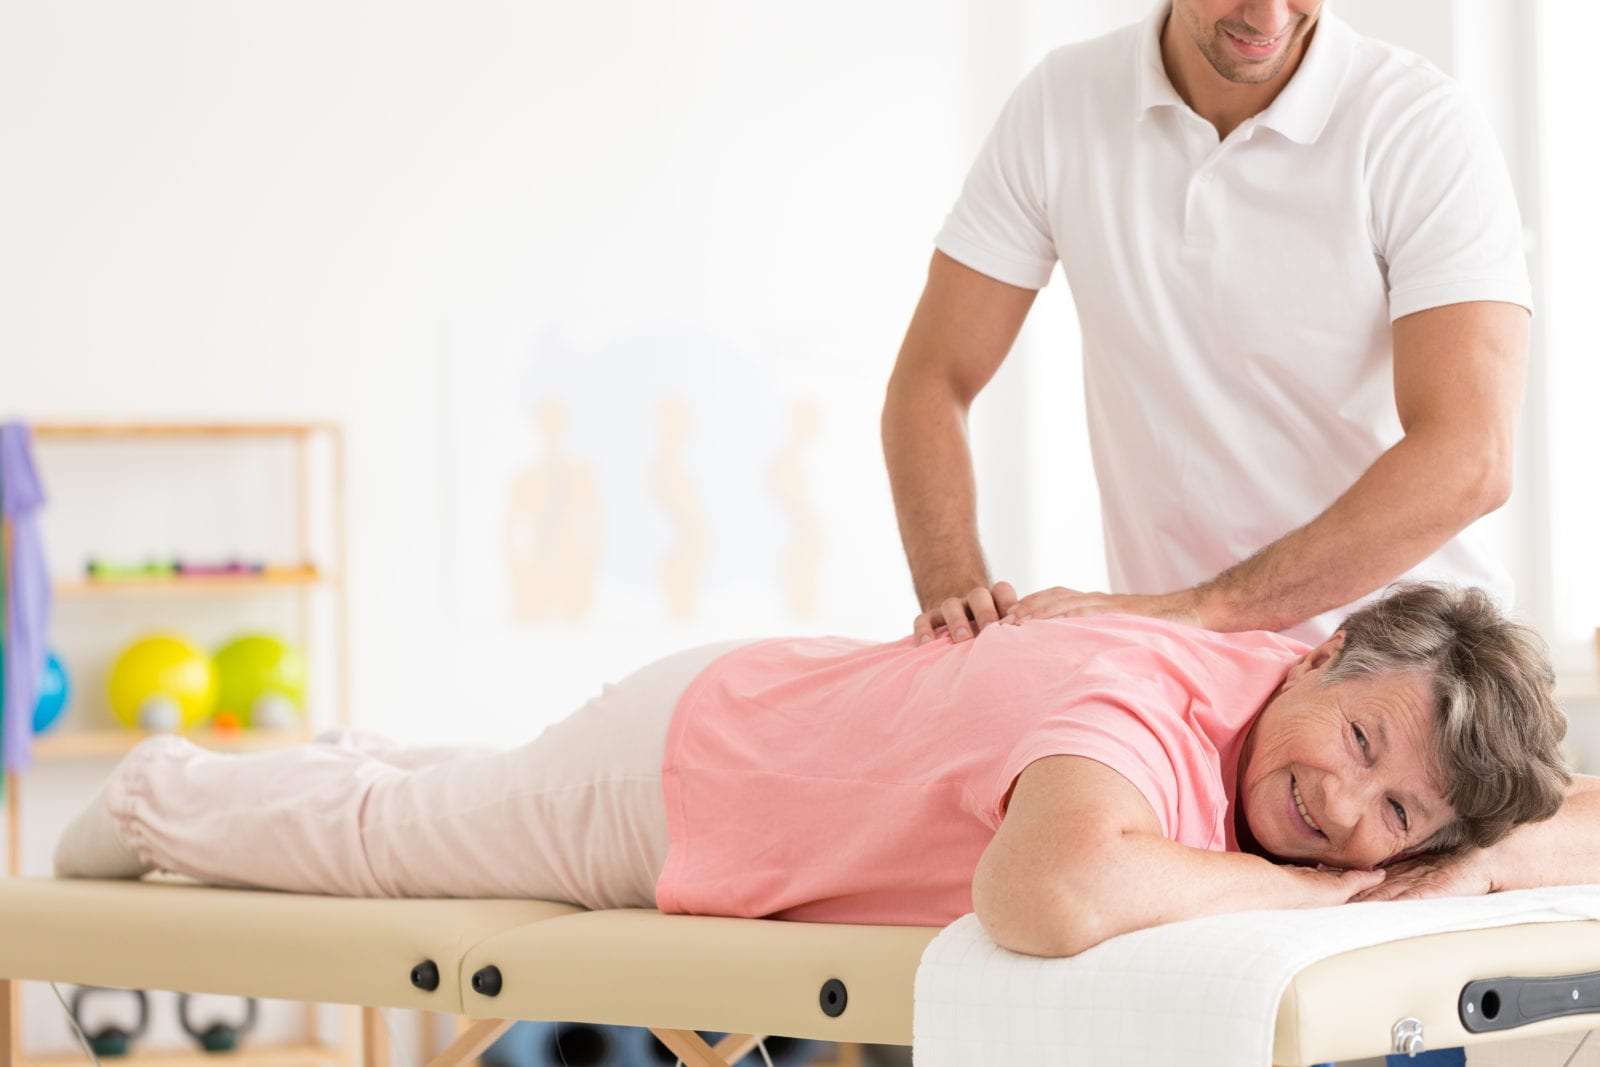 Does Medicare Cover Massage?